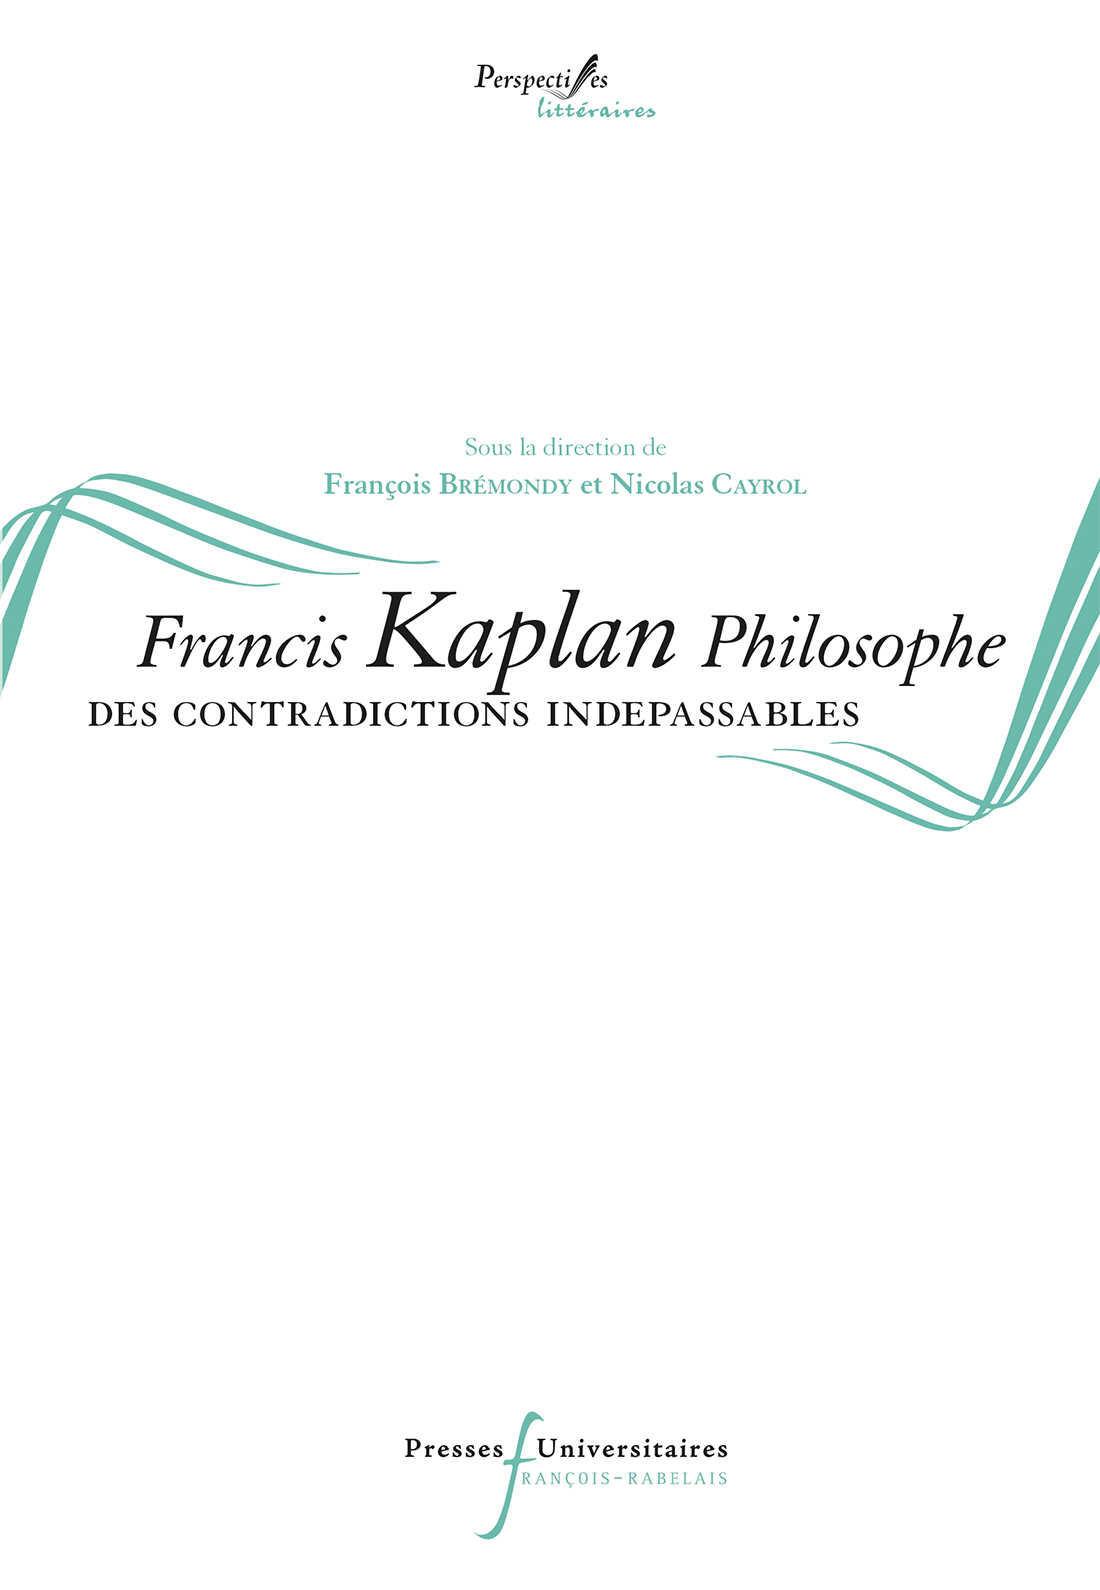 Francis Kaplan philosophe